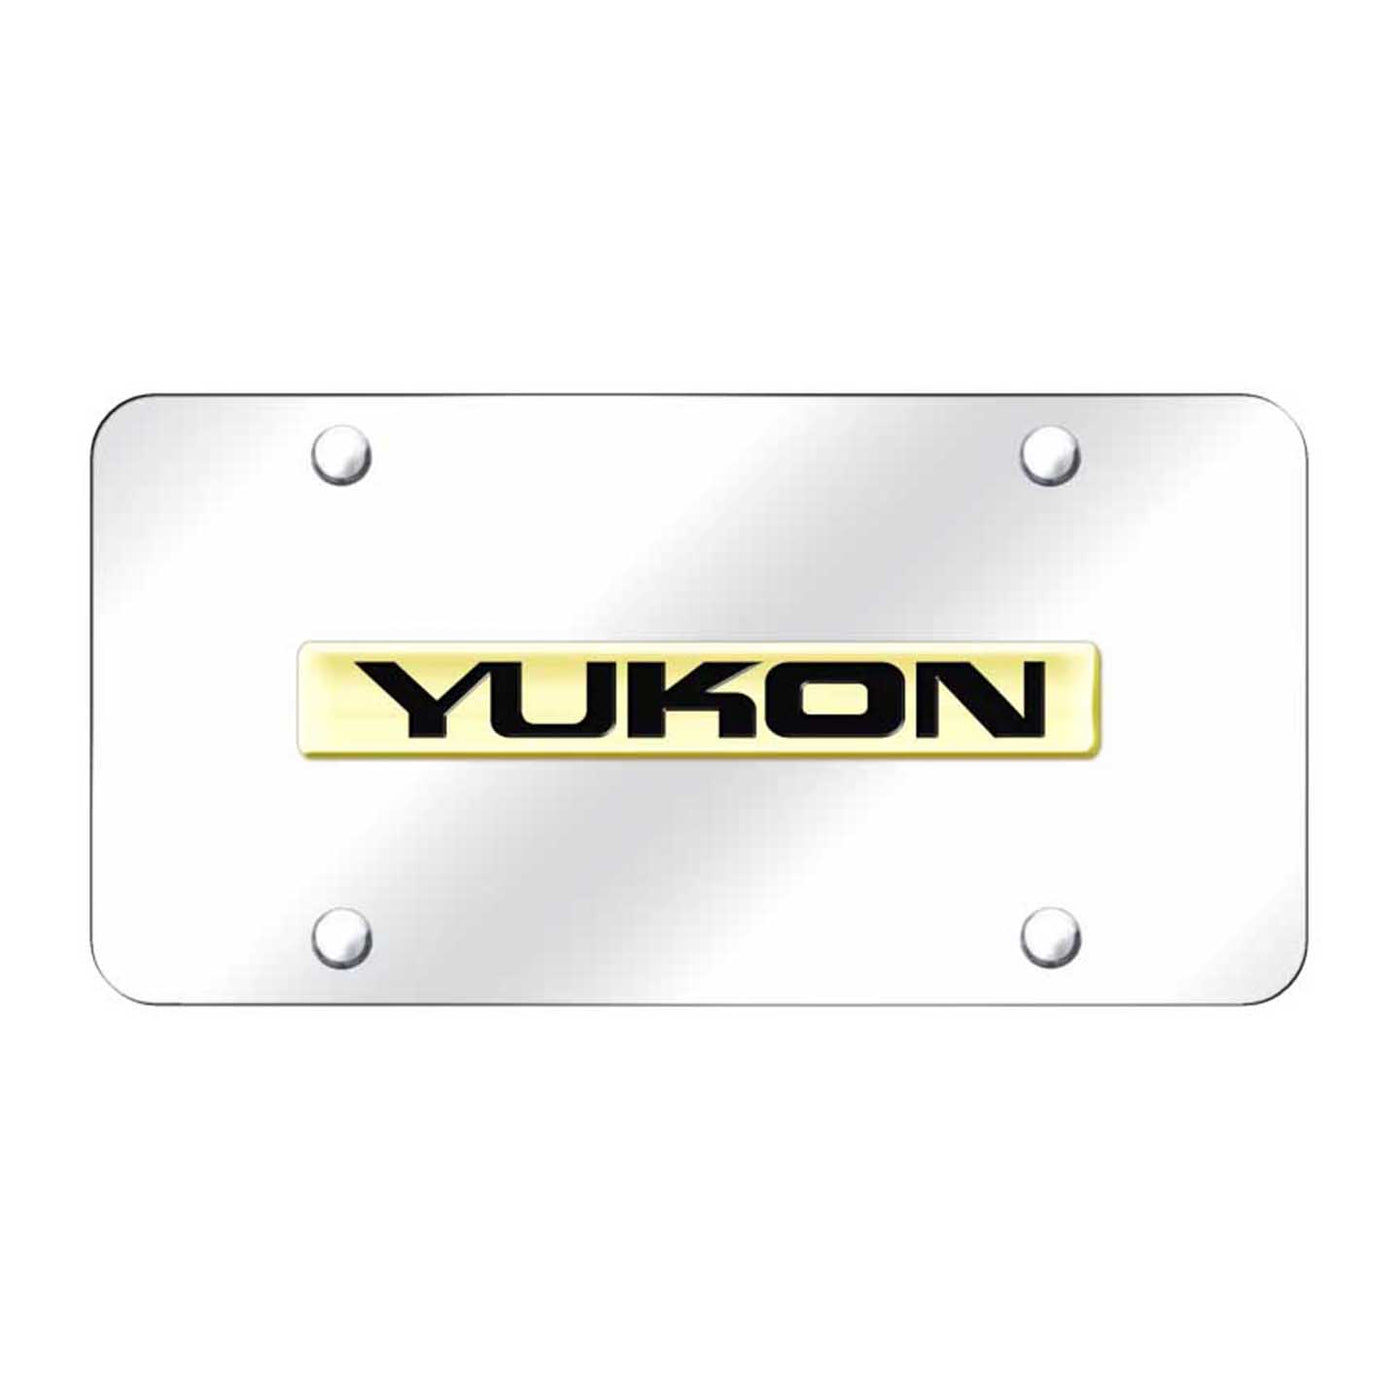 Yukon Name License Plate - Gold on Mirrored